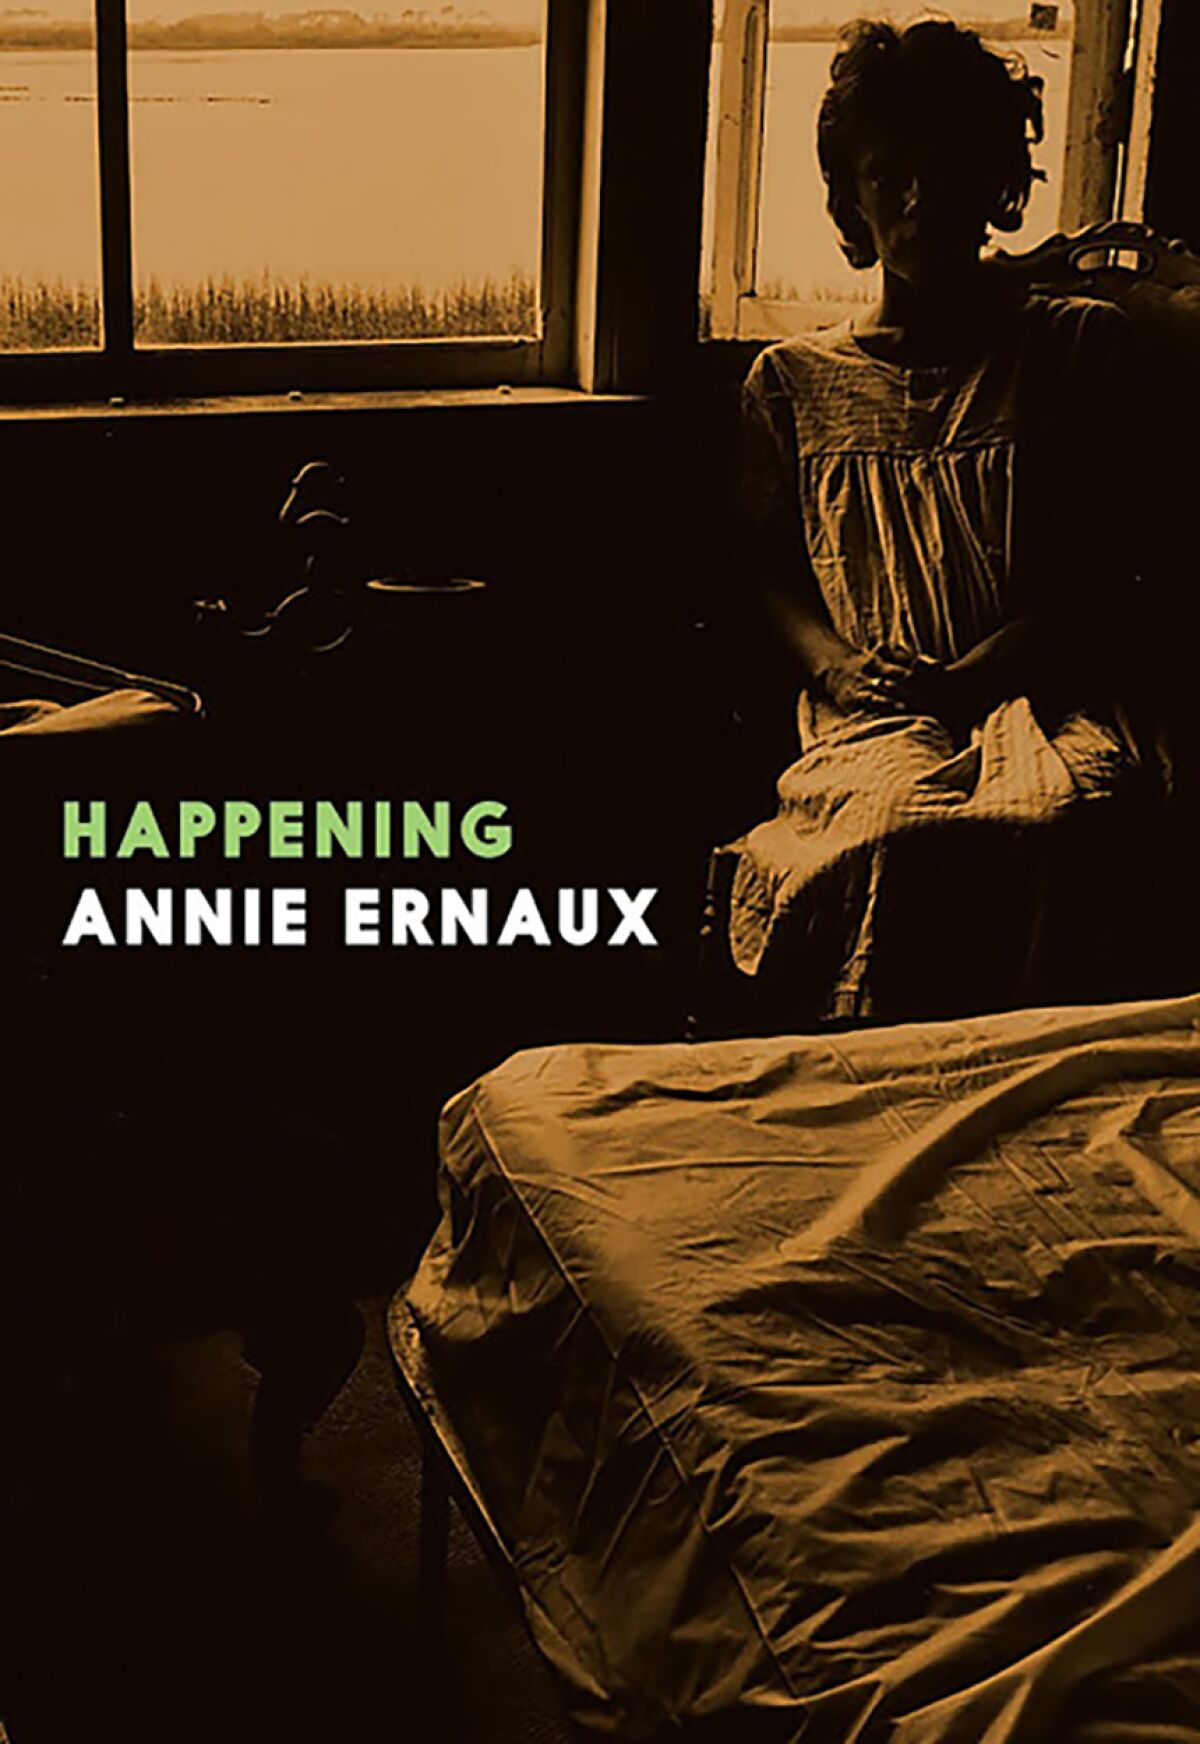 "Happening" by Annie Ernaux